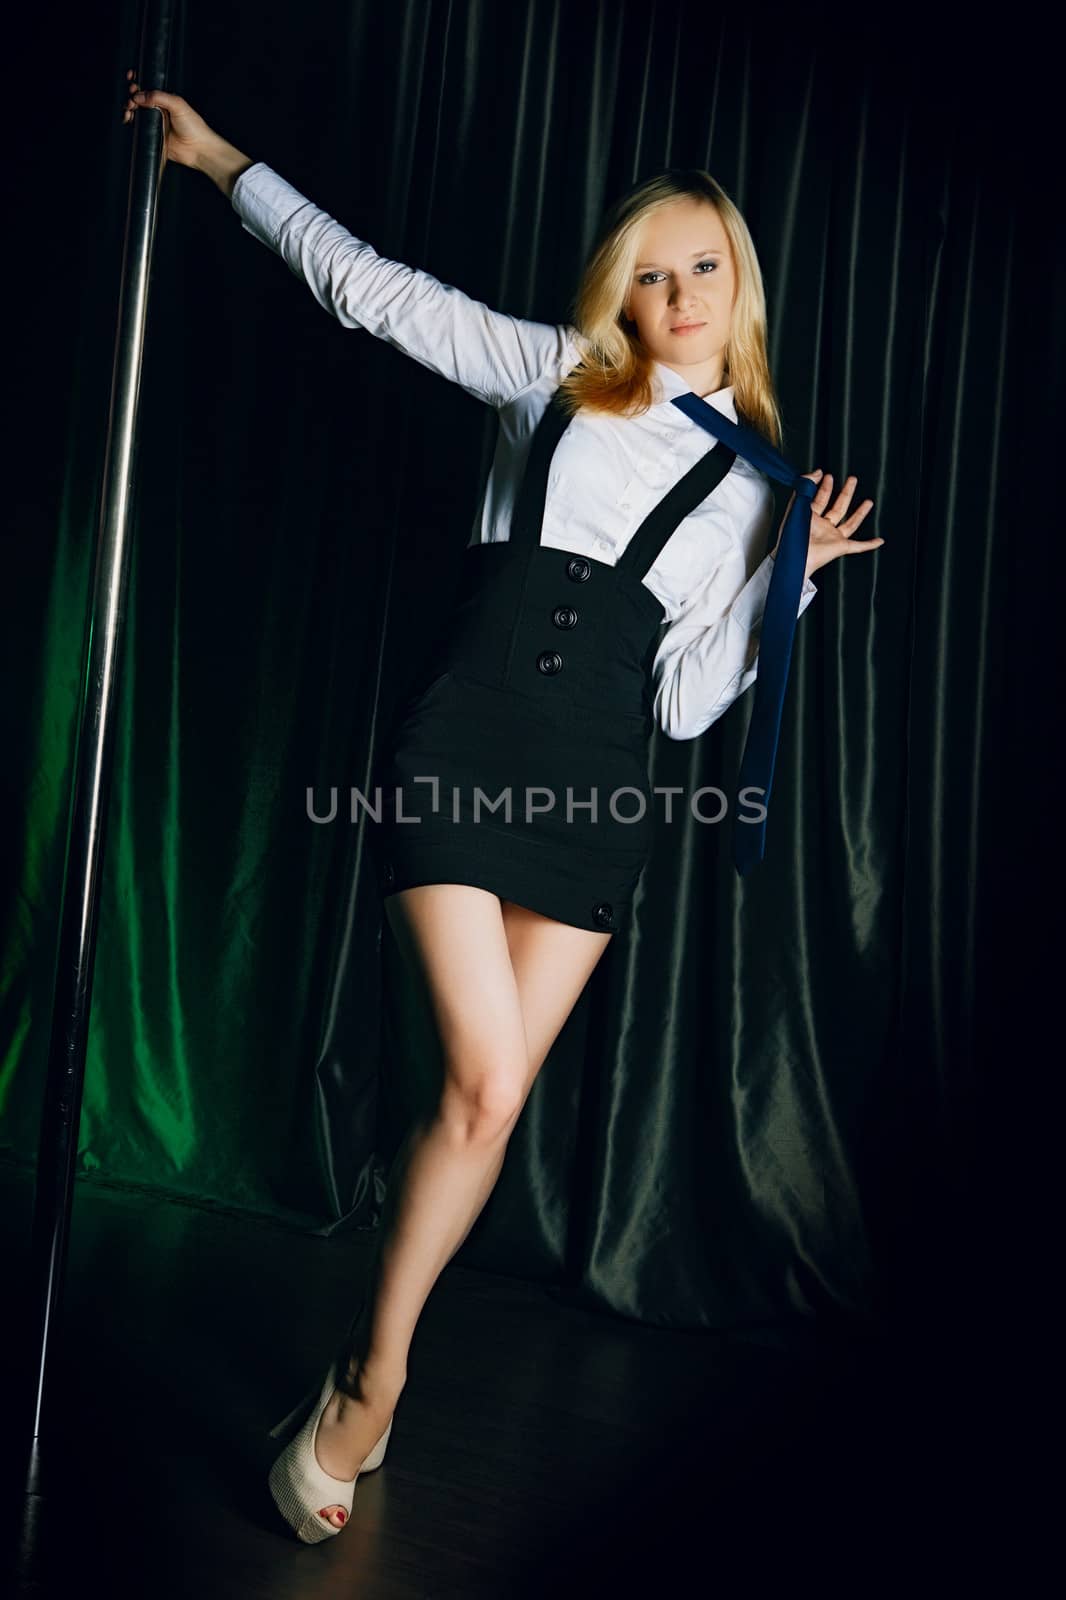 Pole Dance Woman by petr_malyshev